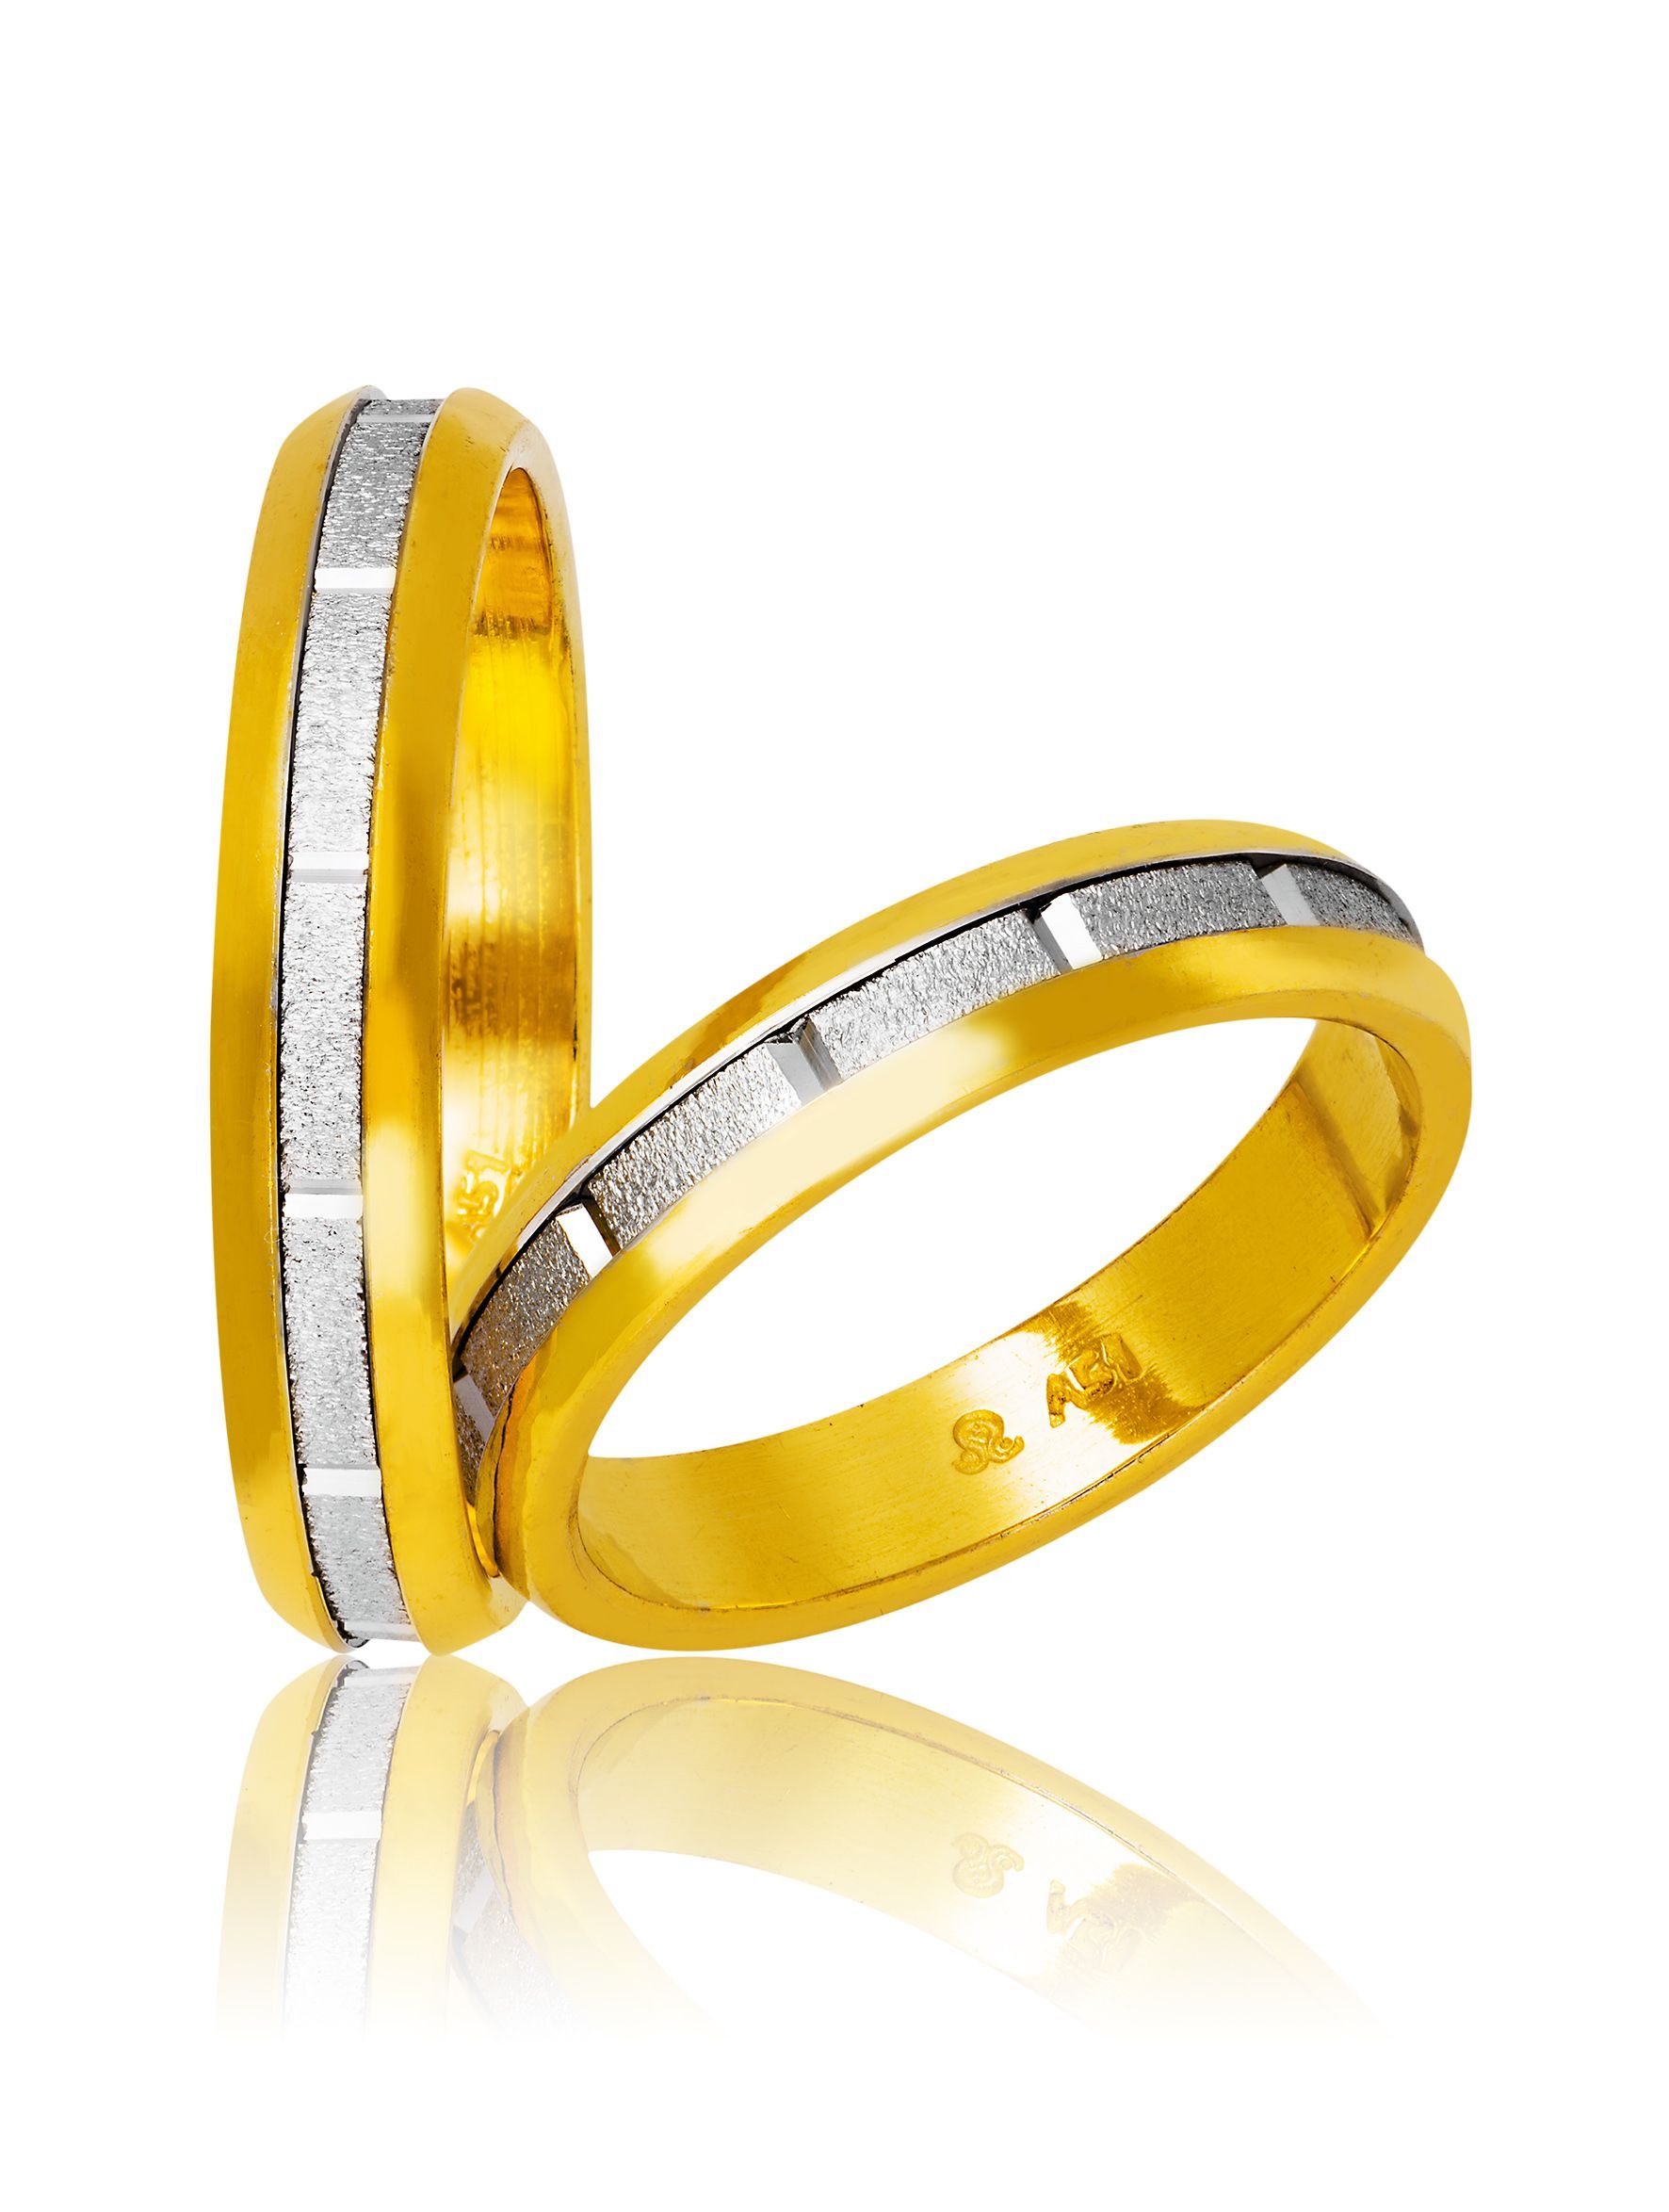 White gold & gold wedding rings 4.3mm (code 720)